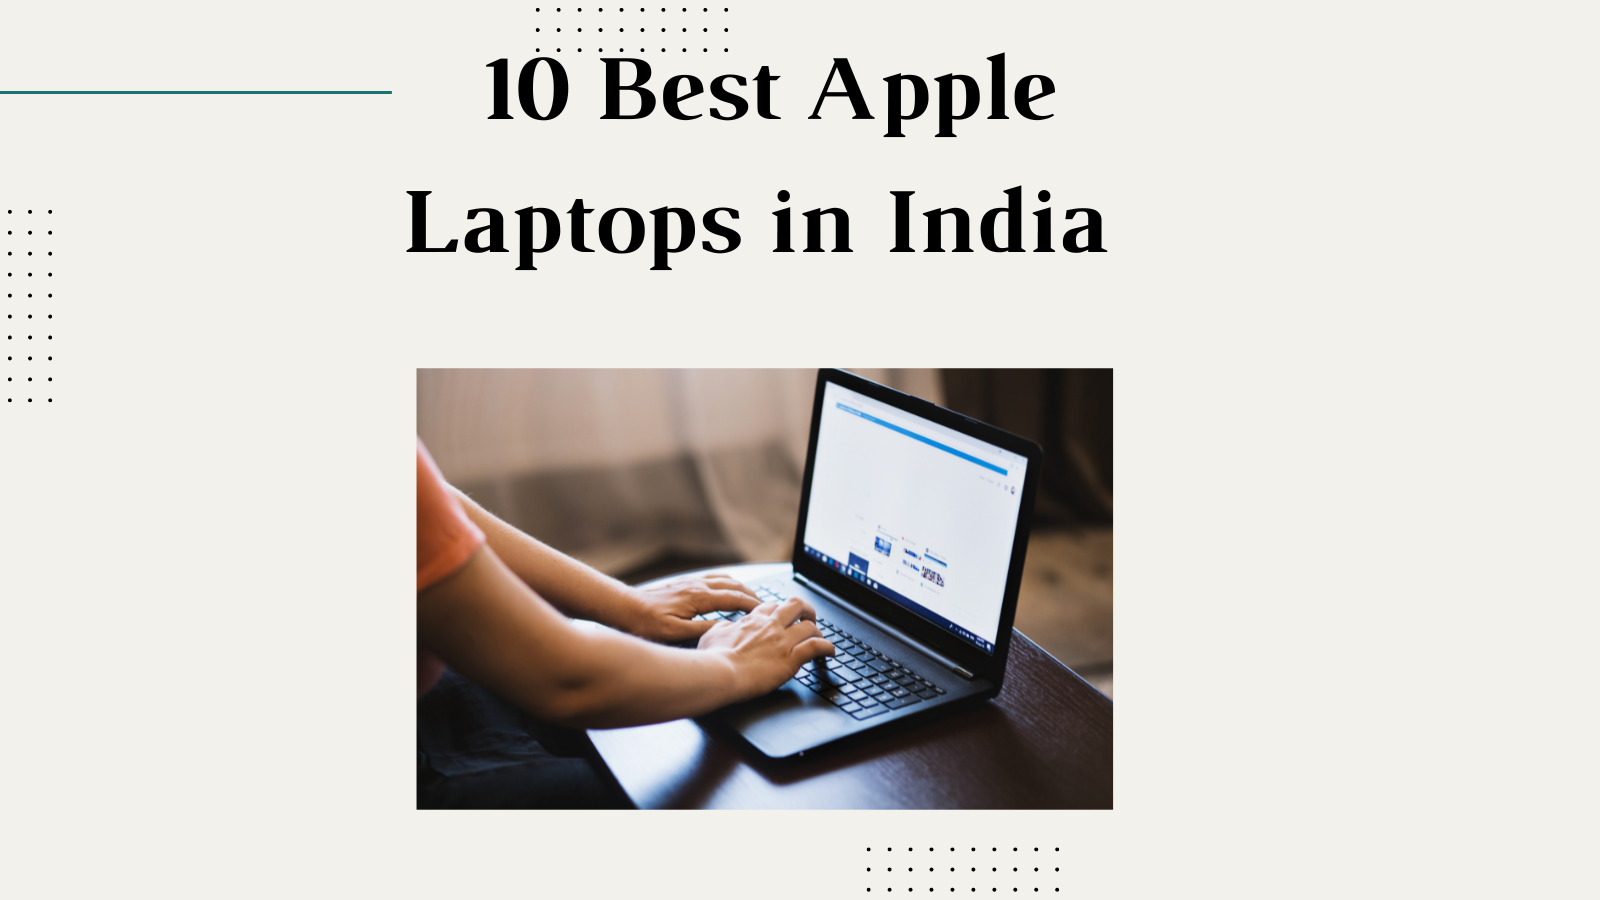 10 Best Apple Laptops in India